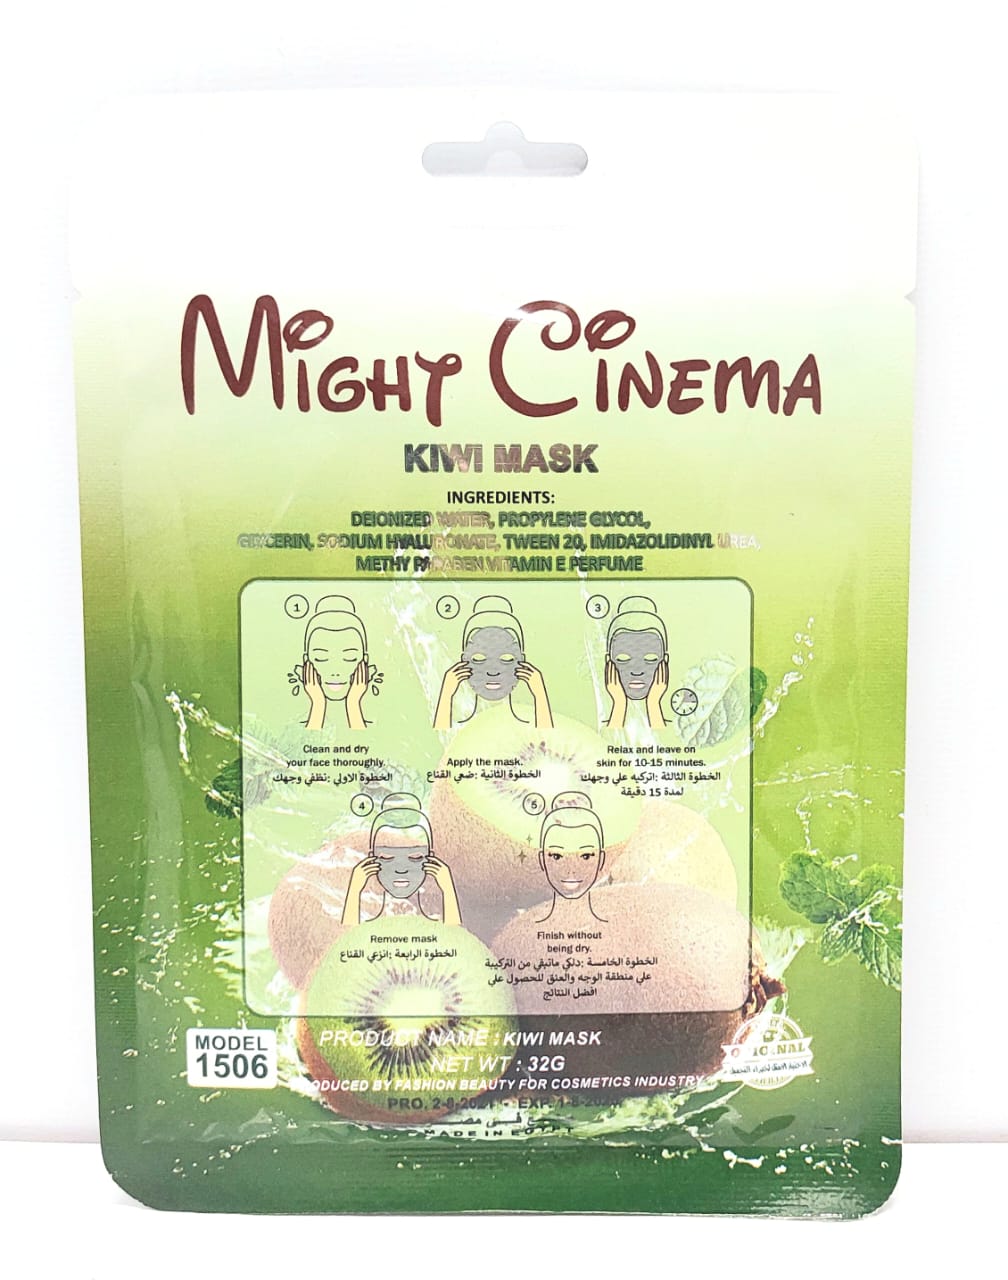 Kiwi Mask by Might Cinema